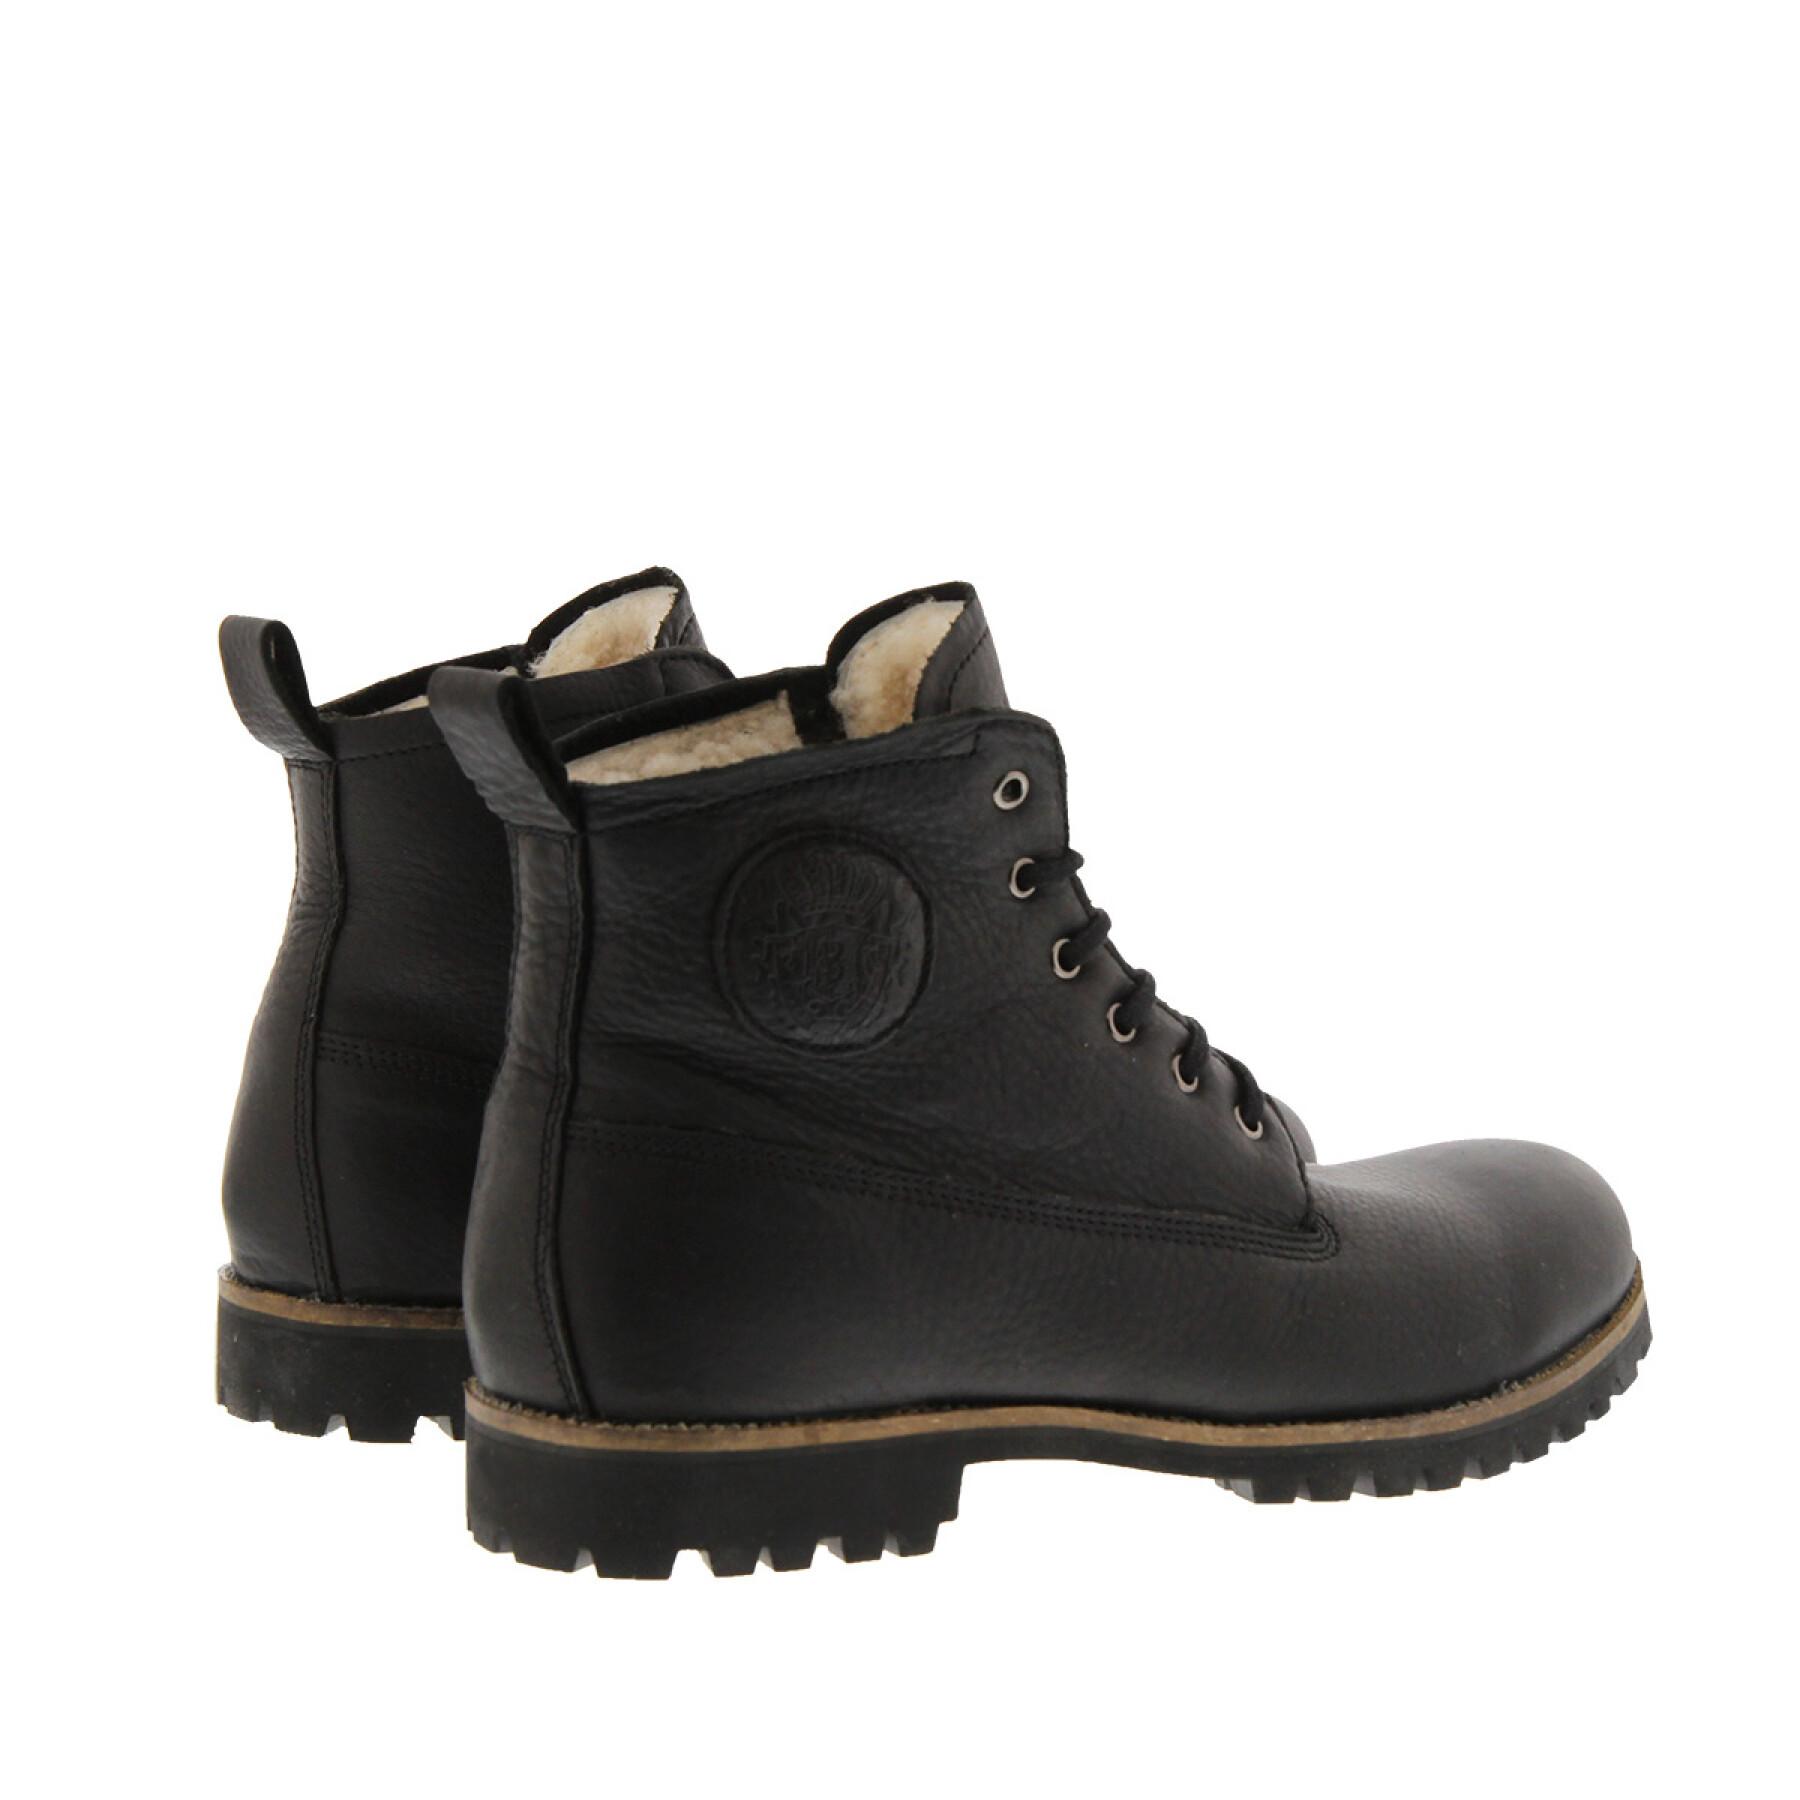 Chaussures Blackstone Boots - Fur